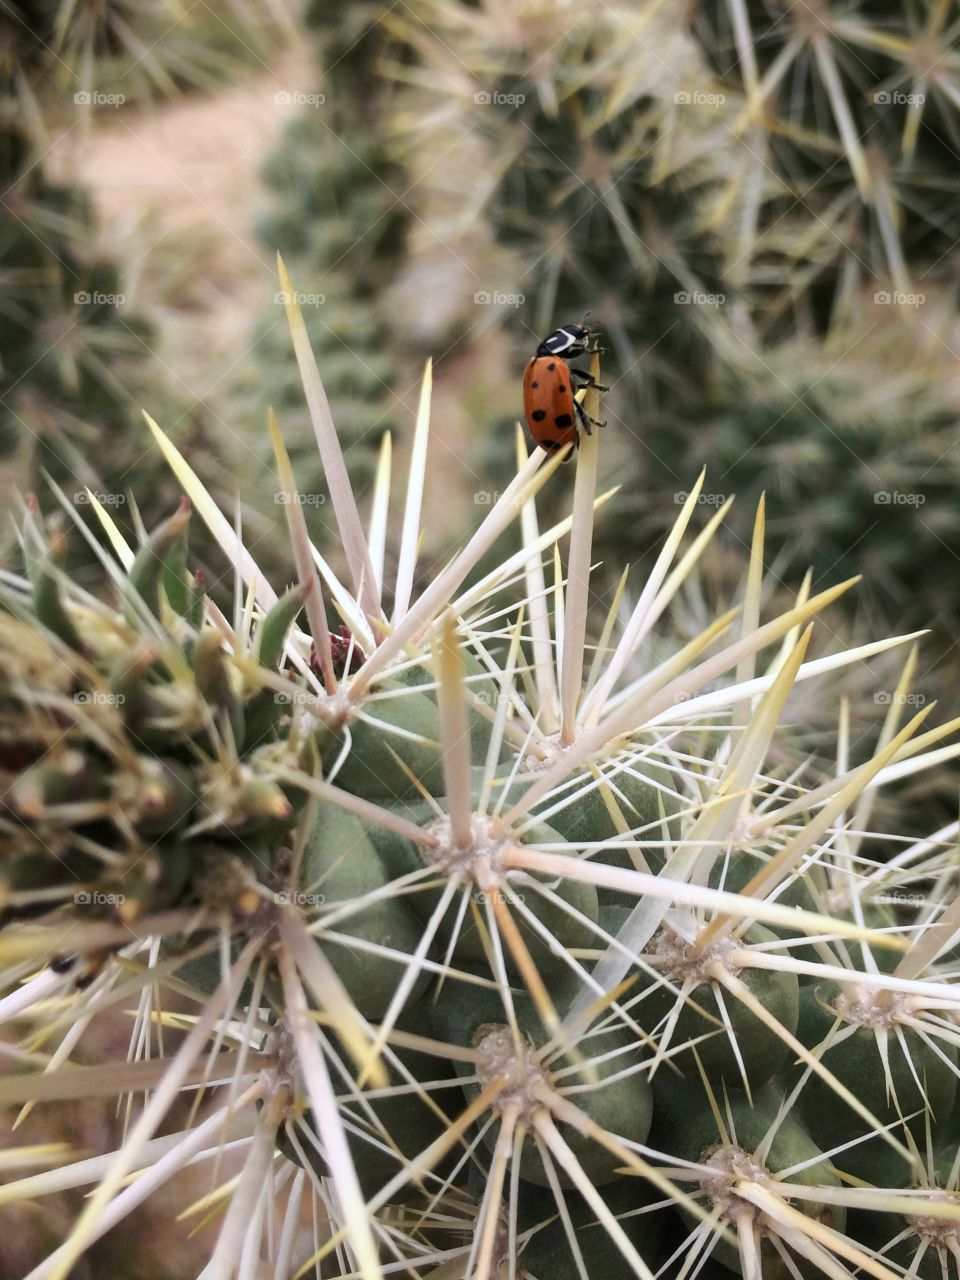 Ladybug 🐞 explores a cactus in the desert. 